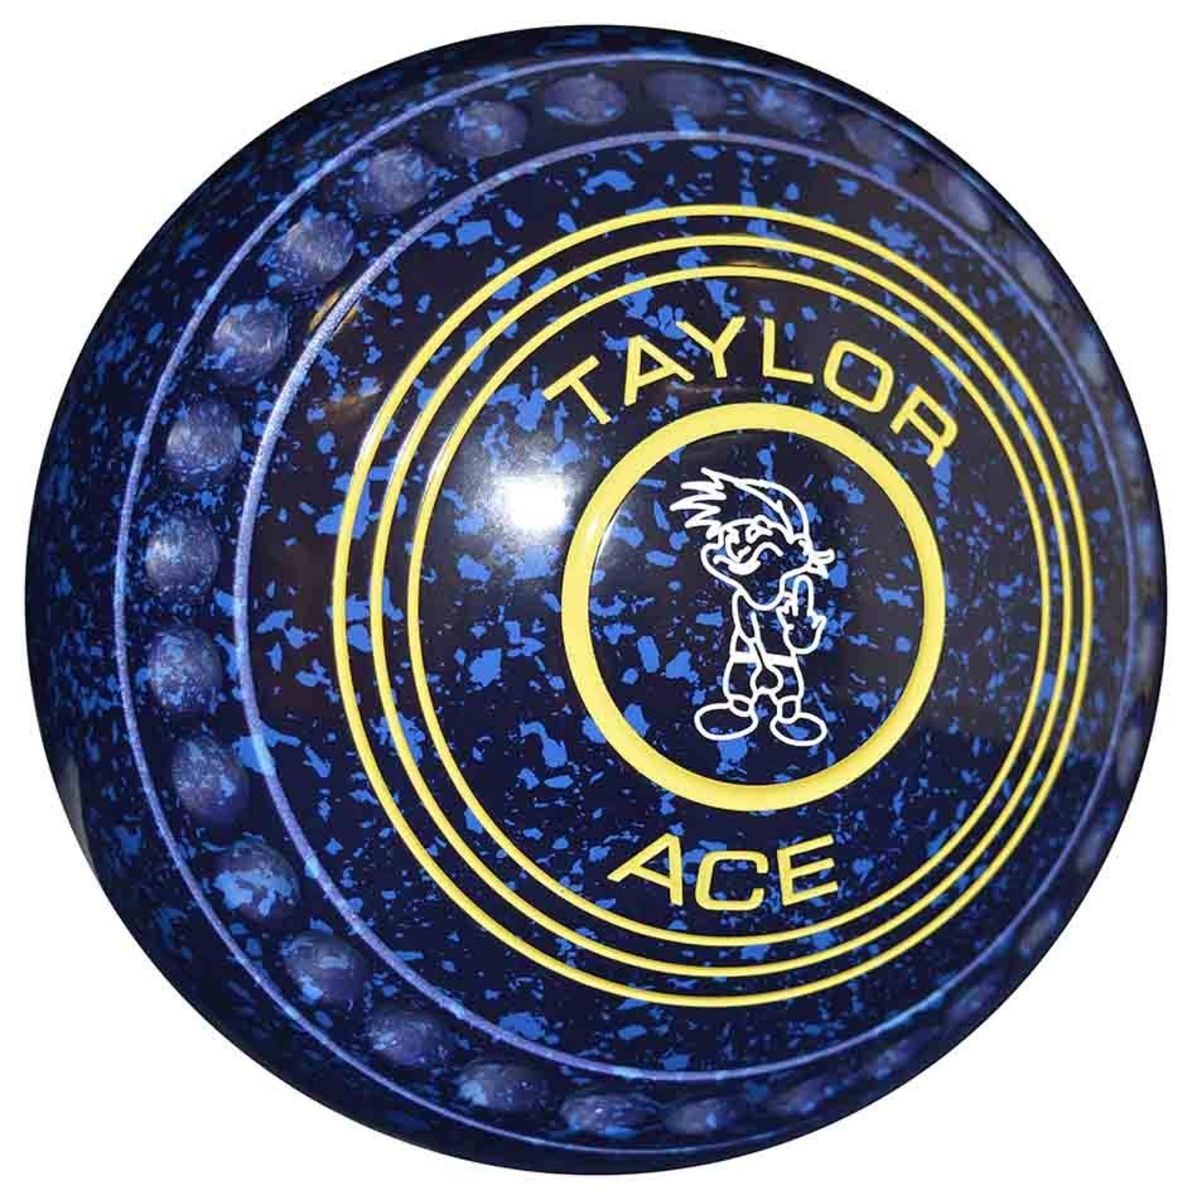 Taylor Ace Bowls Size 4